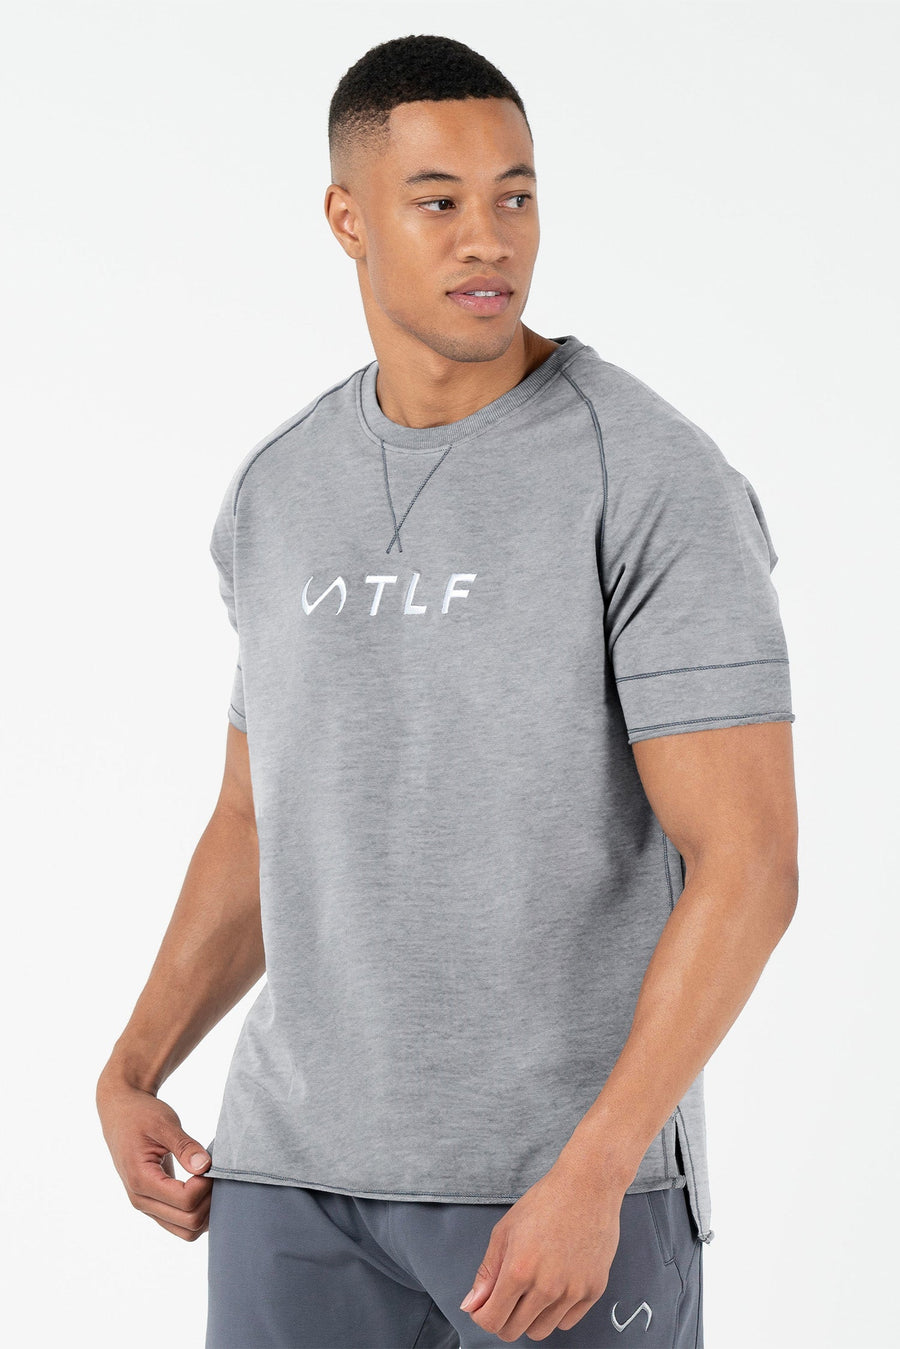 TLF Vital Gym Sweatshirt - Mens Workout Sweatshirt – Heather Gray - 2